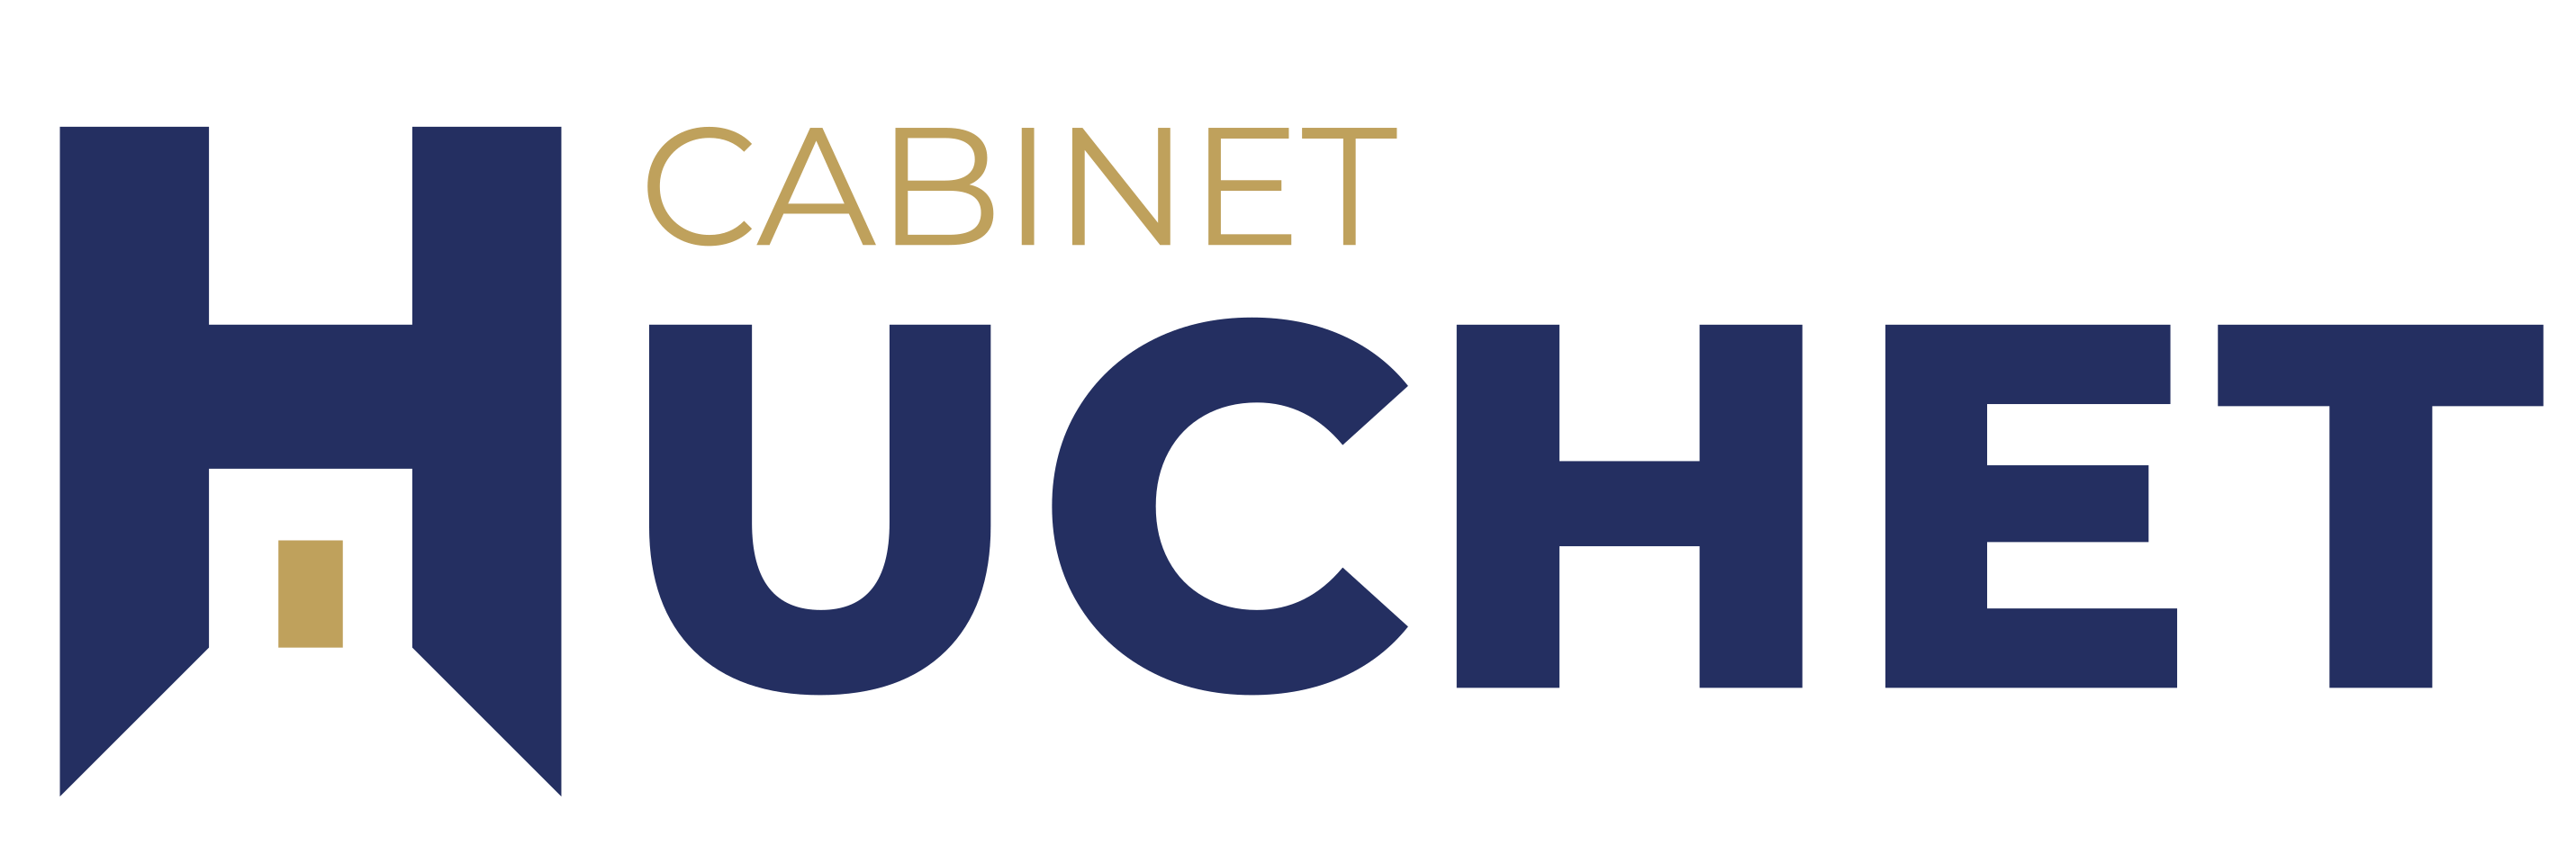 Cabinet Huchet